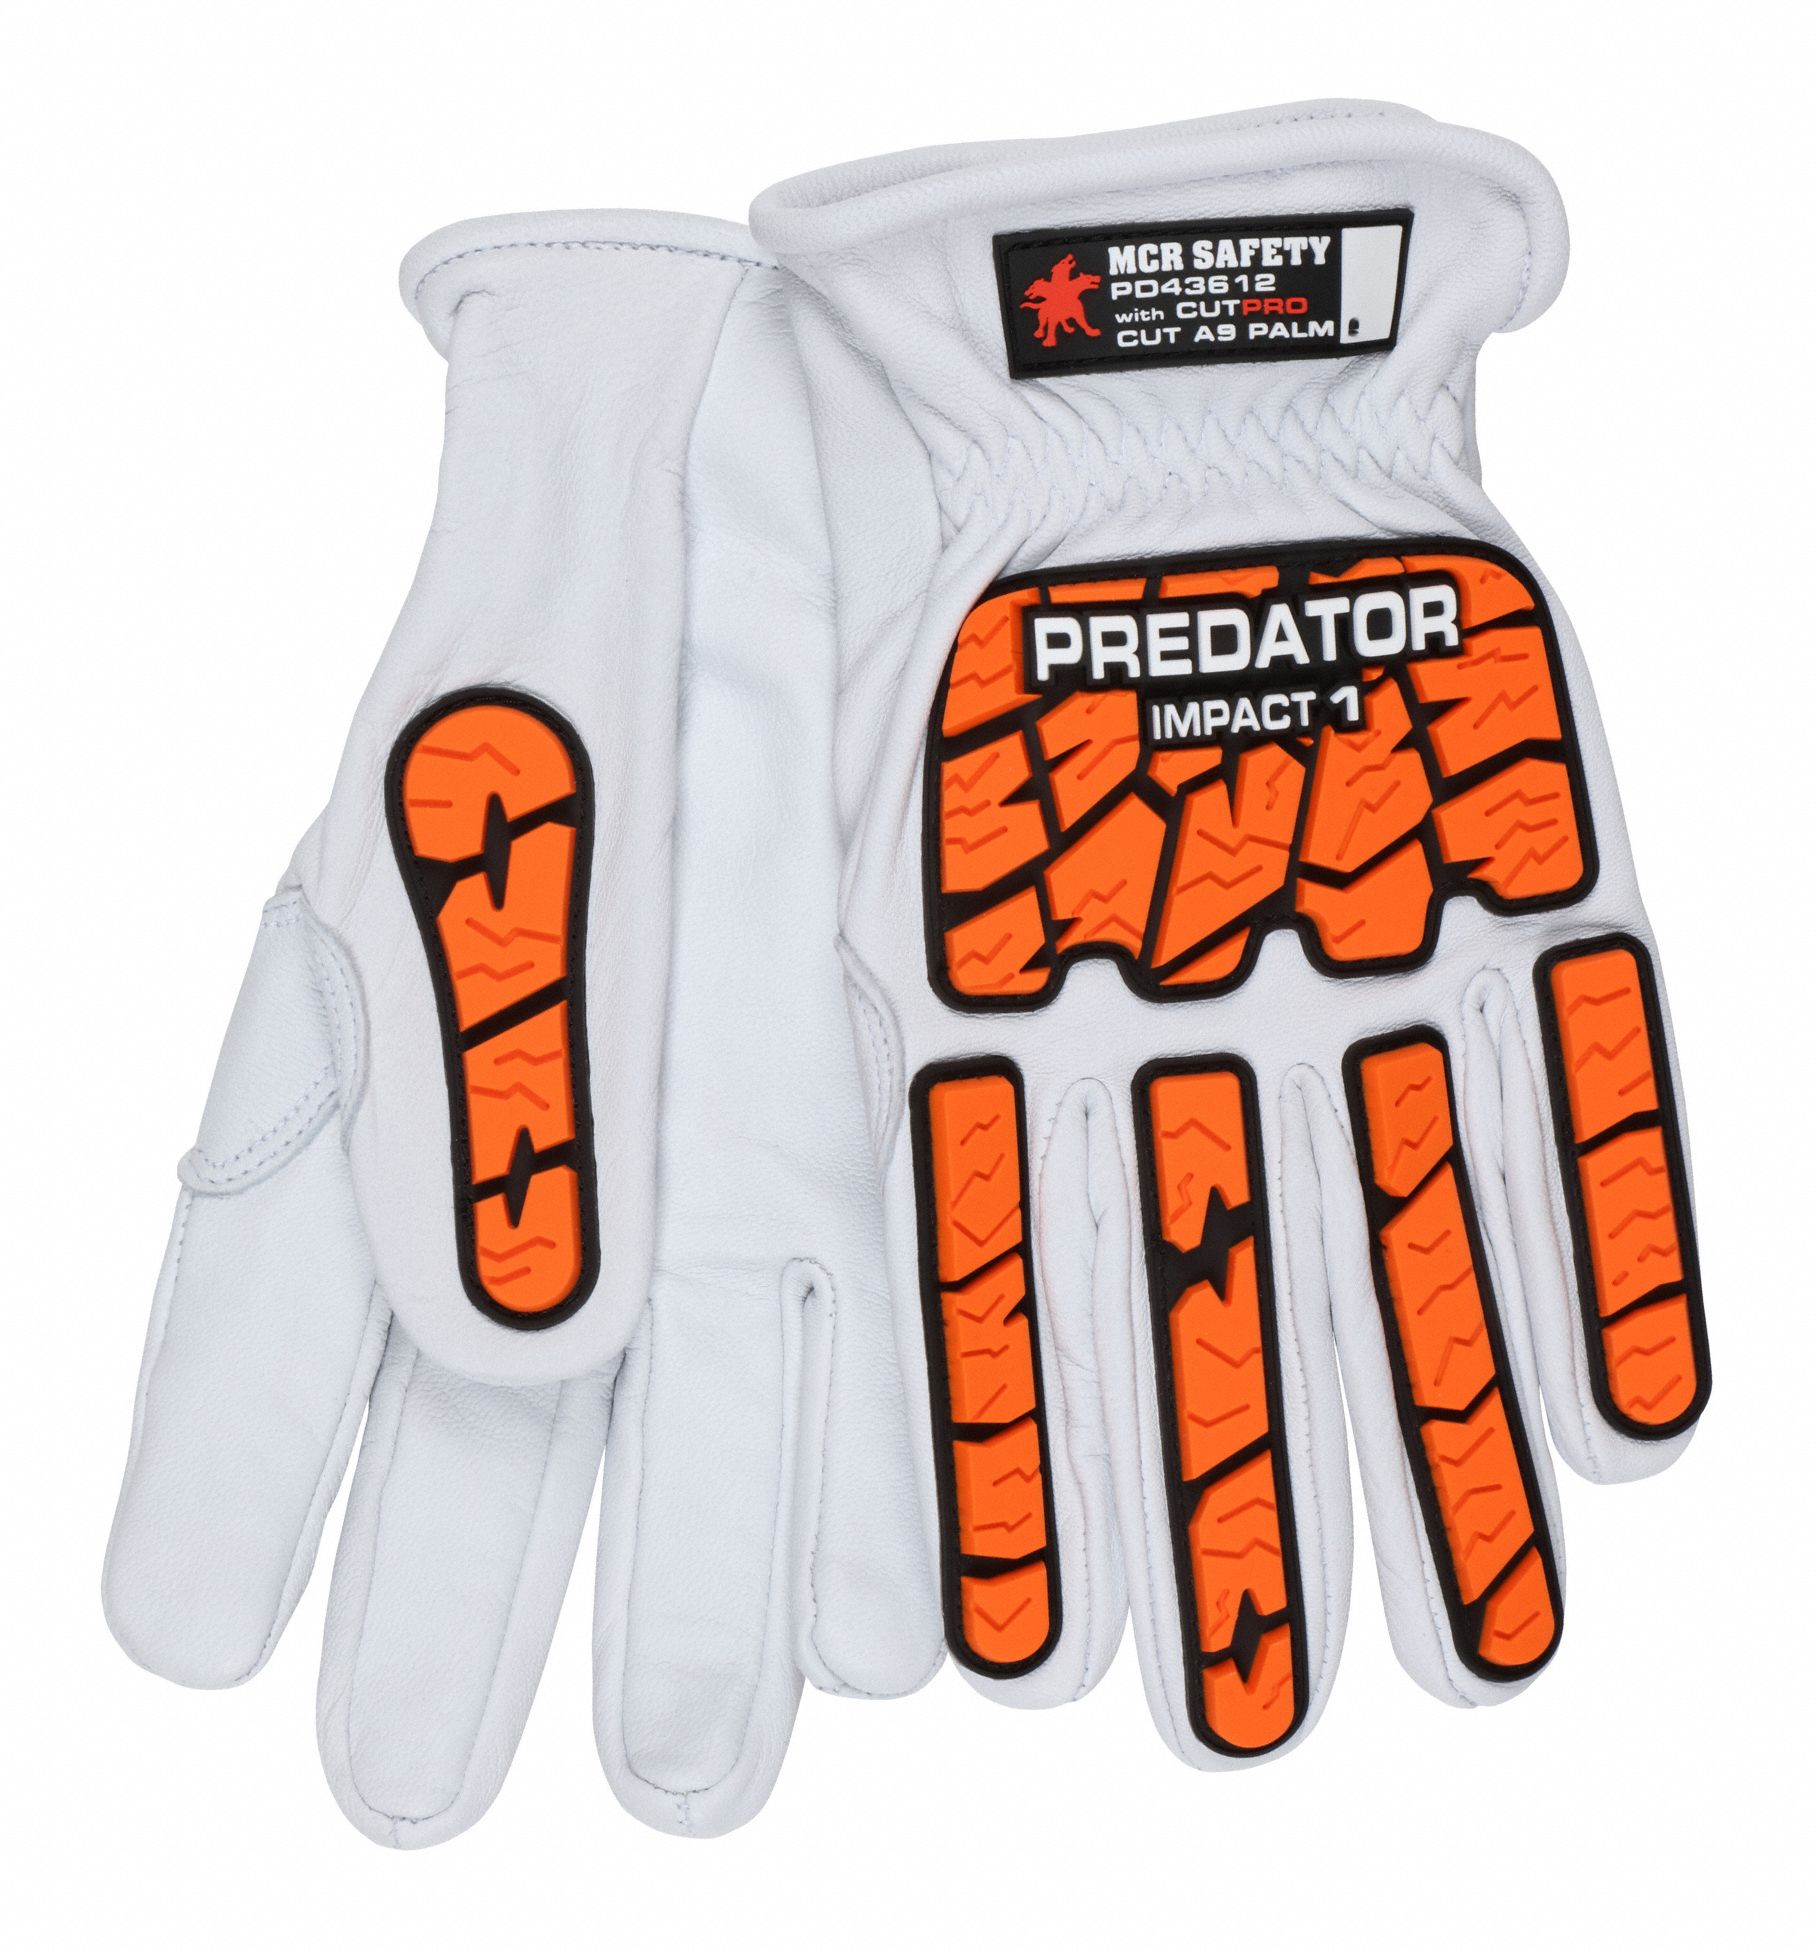 Leather Gloves: M ( 8 ), Double Palm, Goatskin, Drivers Glove, ANSI Cut Level A9, 1 PR